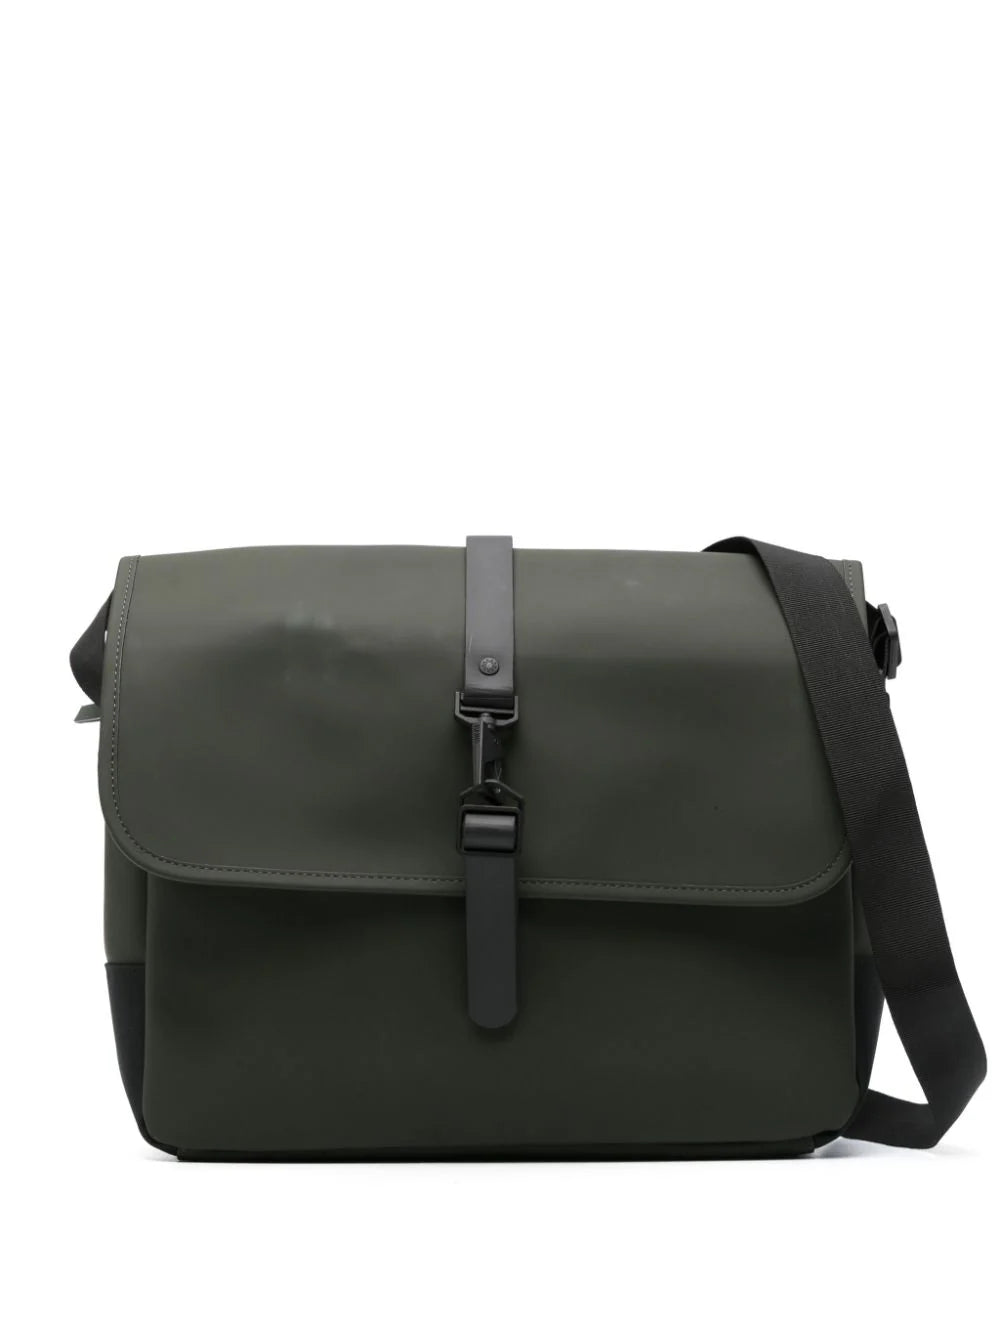 Rains Messenger Bag | Black or Green